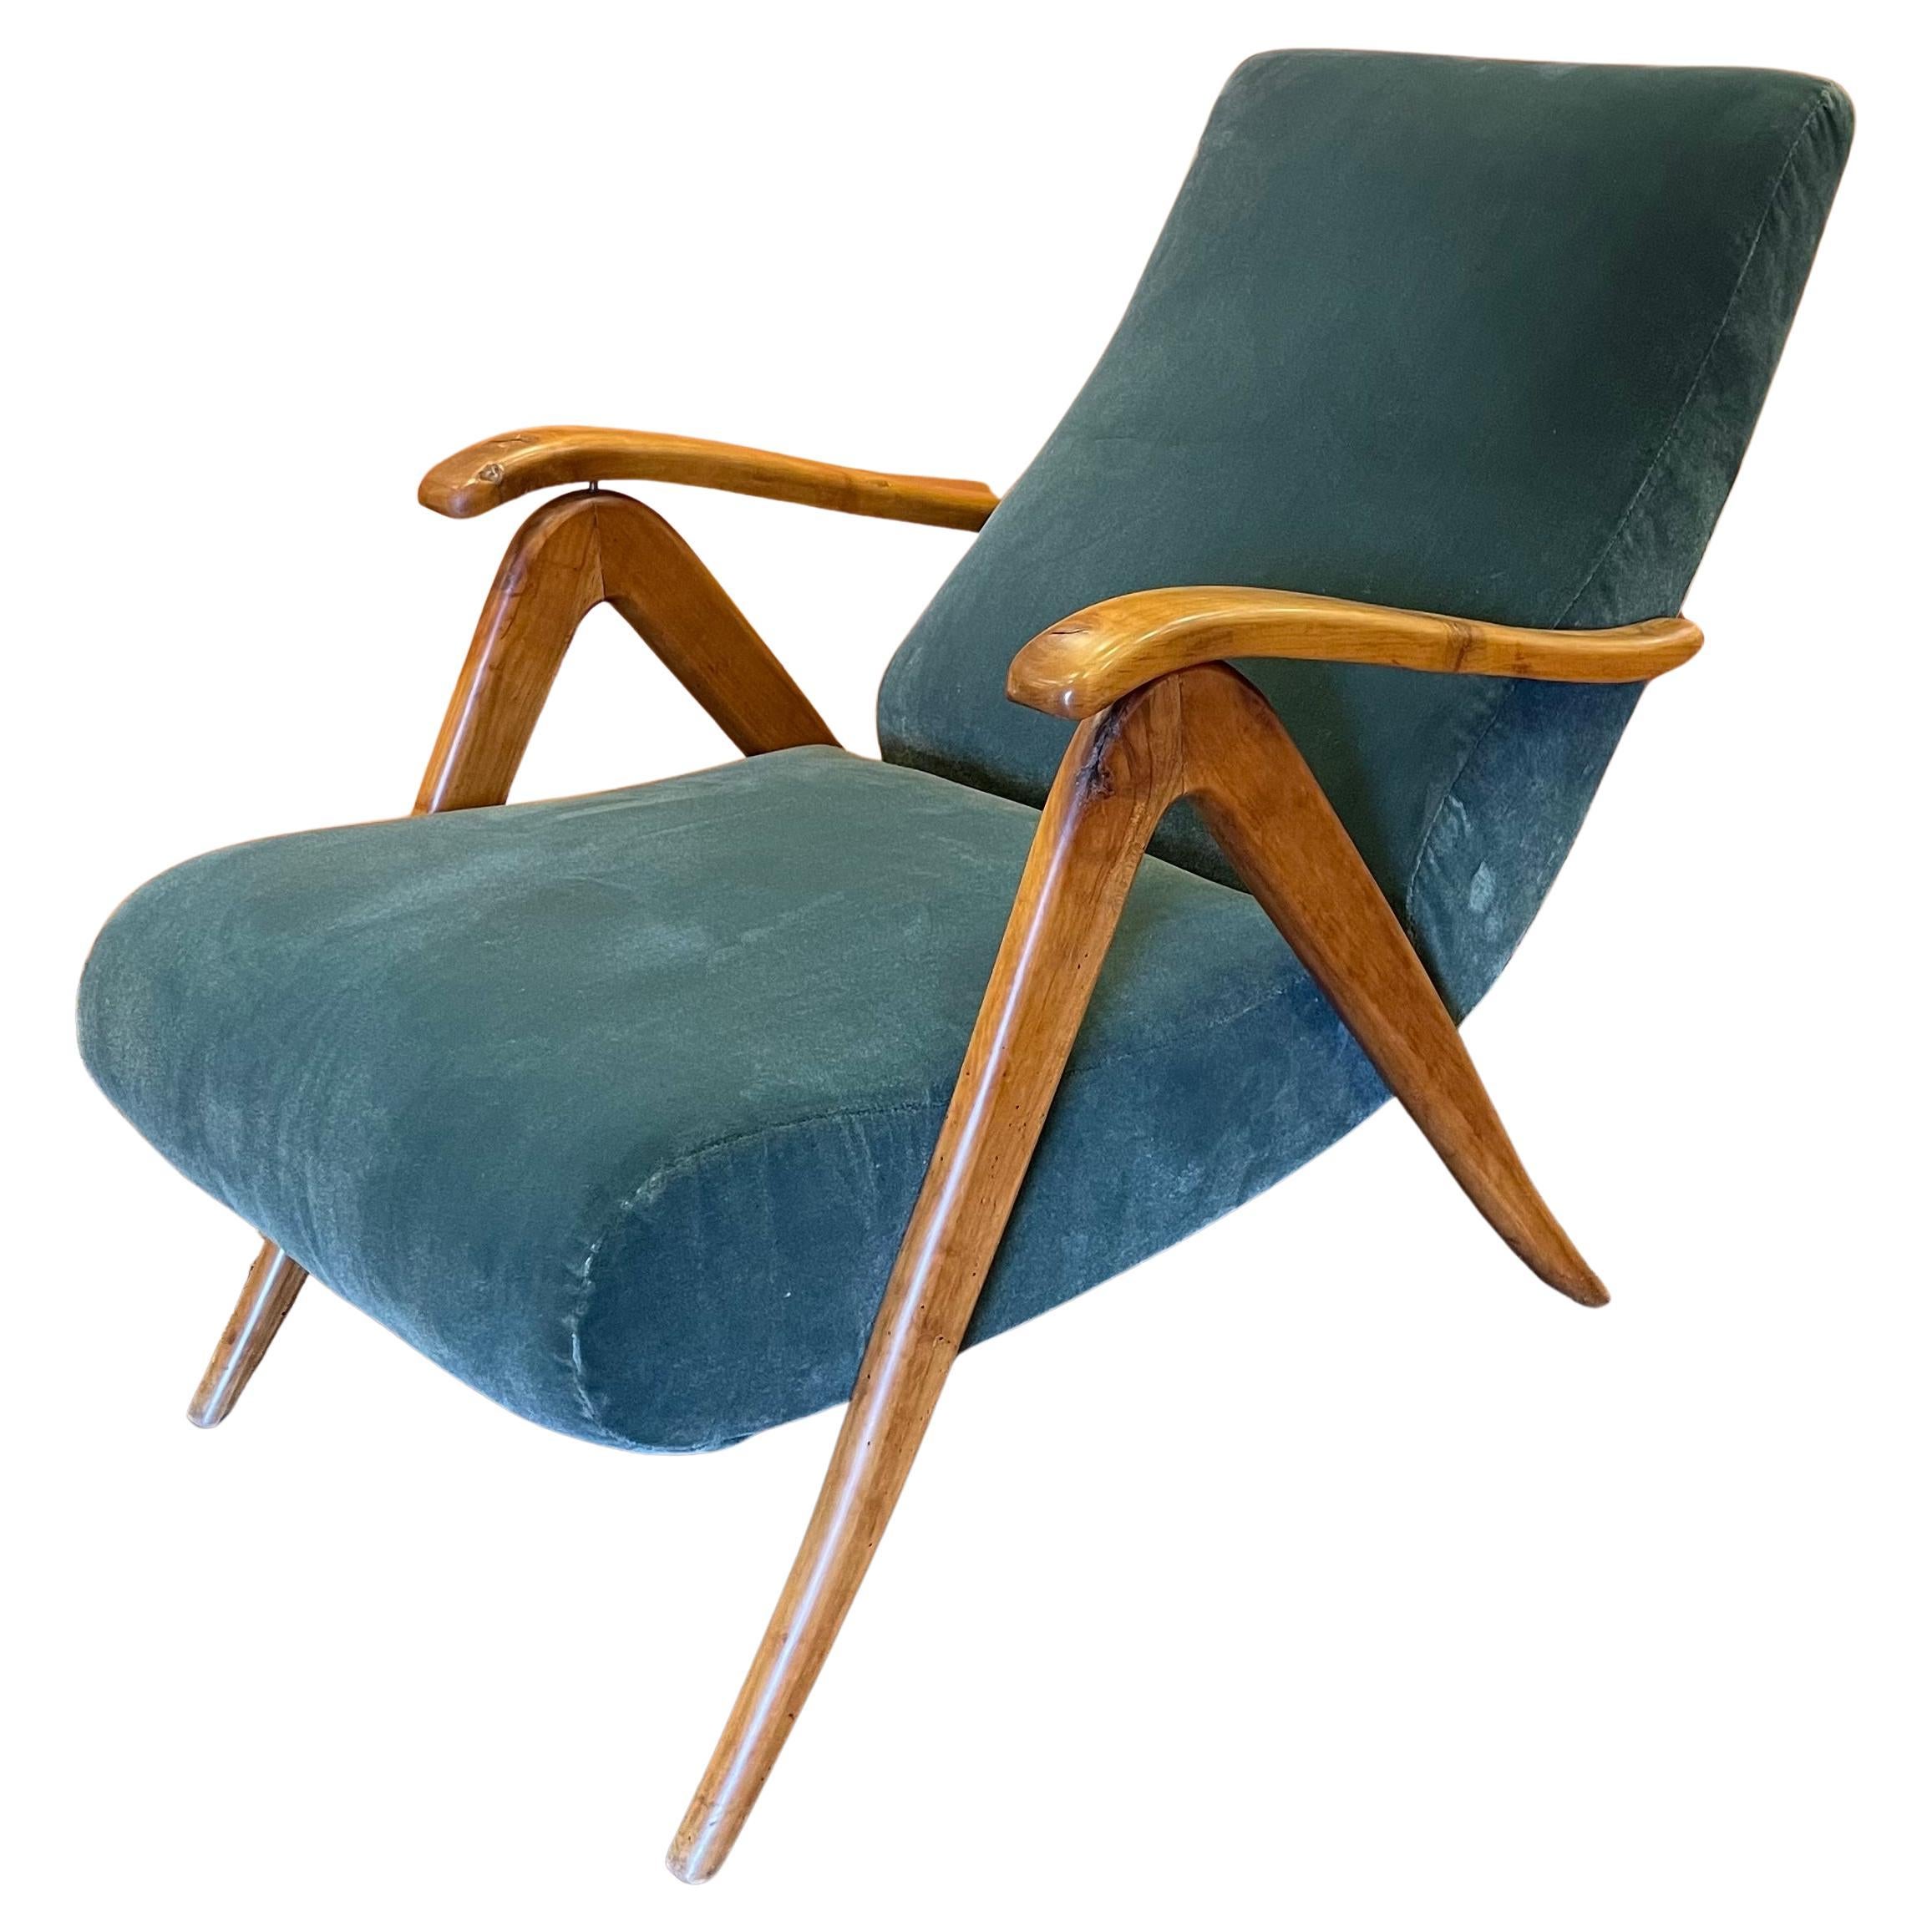 Circa 1940s Italian Reclining Chair